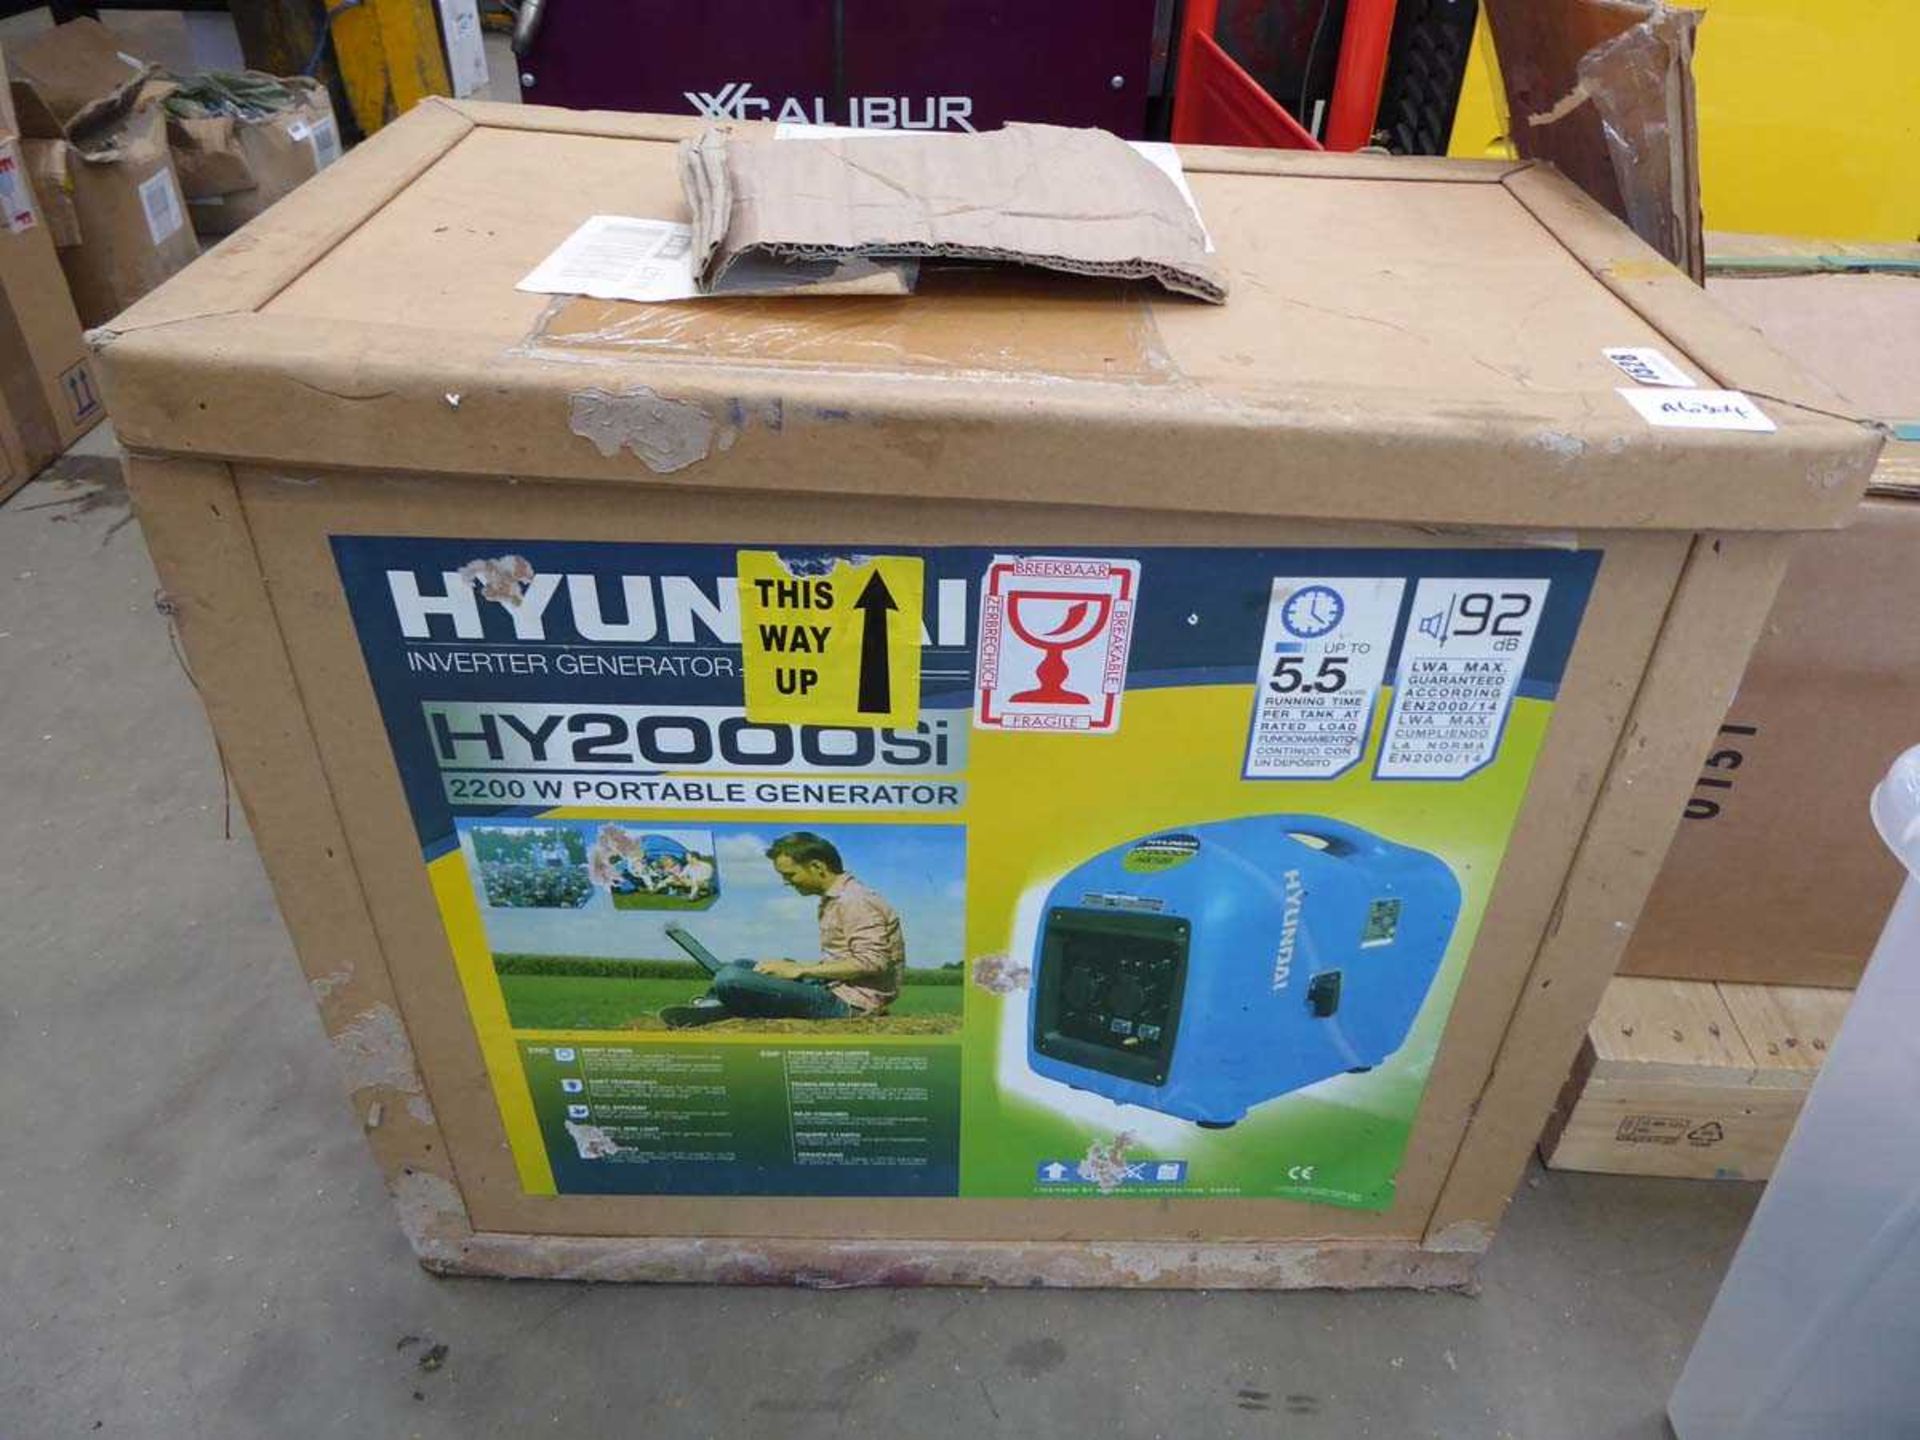 Boxed Hyundai HY2000Si portable generator